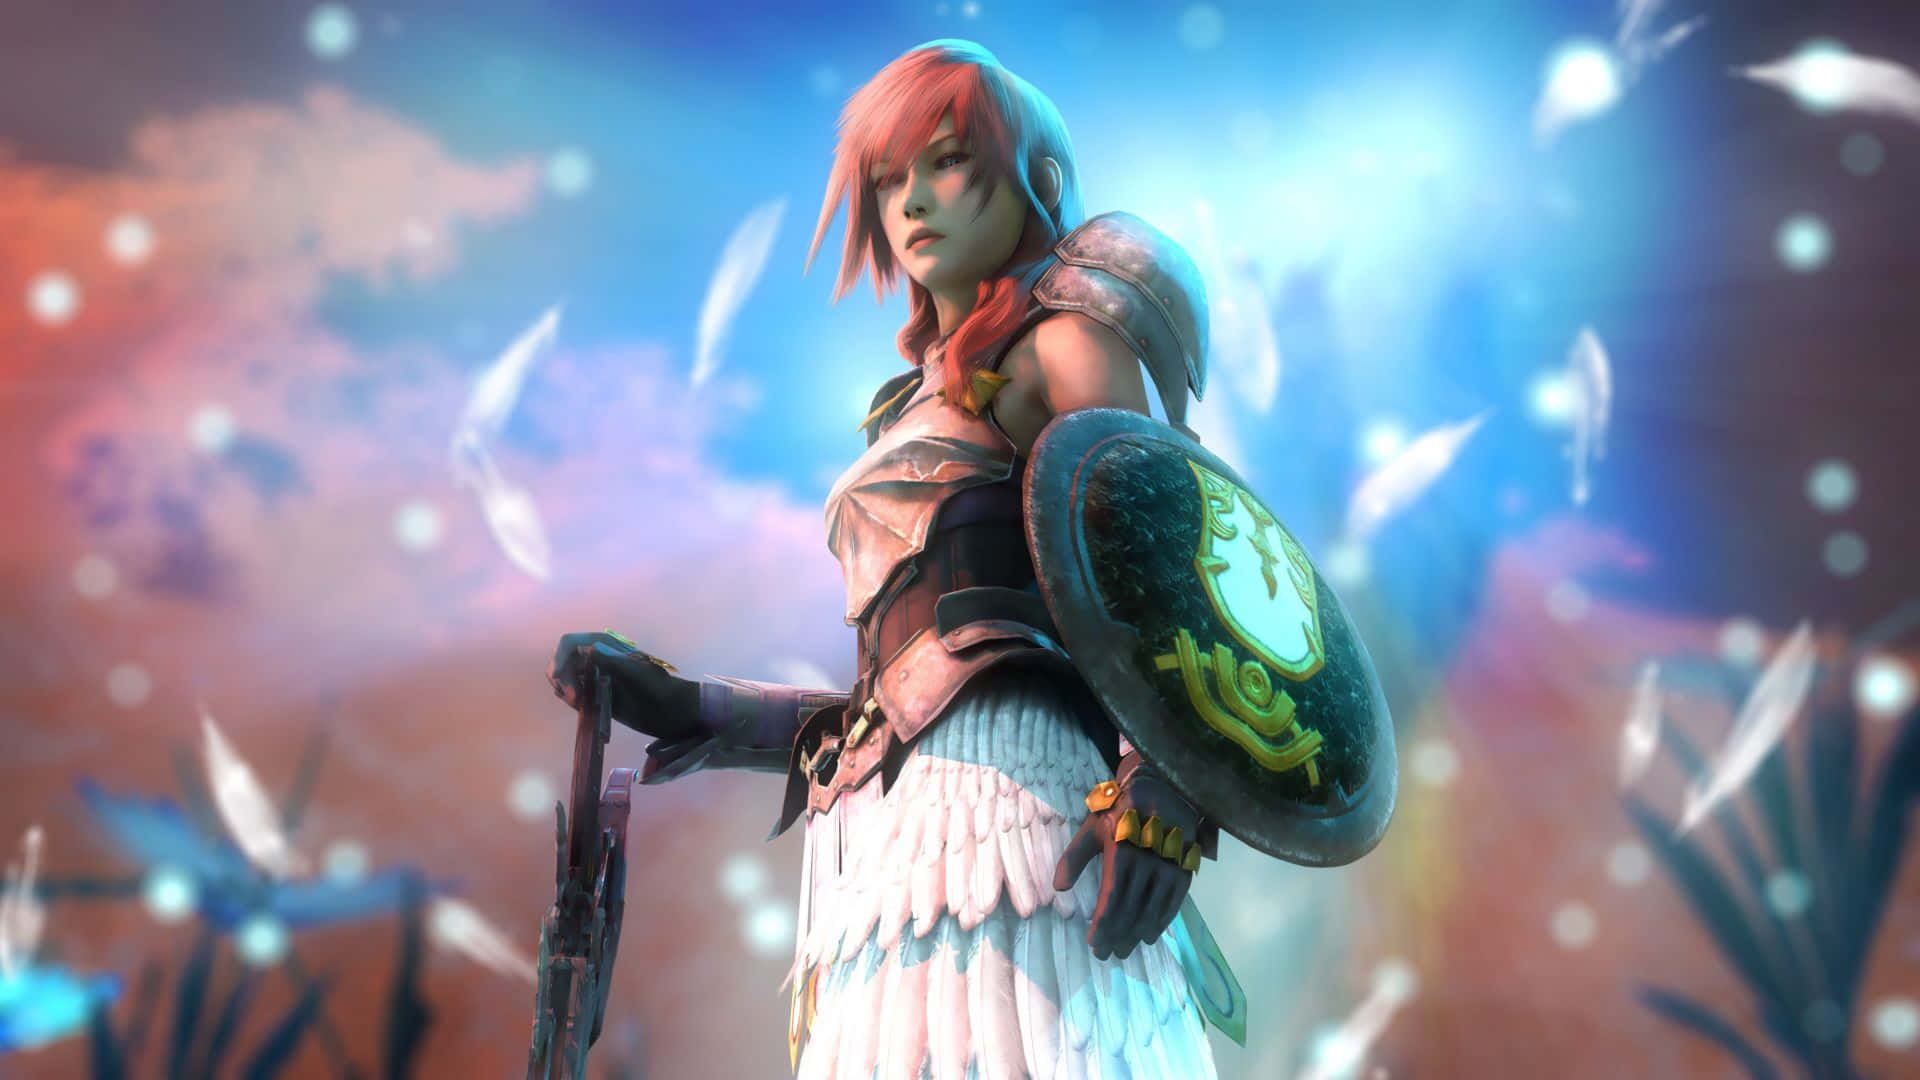 Explore the Complex and Epic World of Final Fantasy Xv